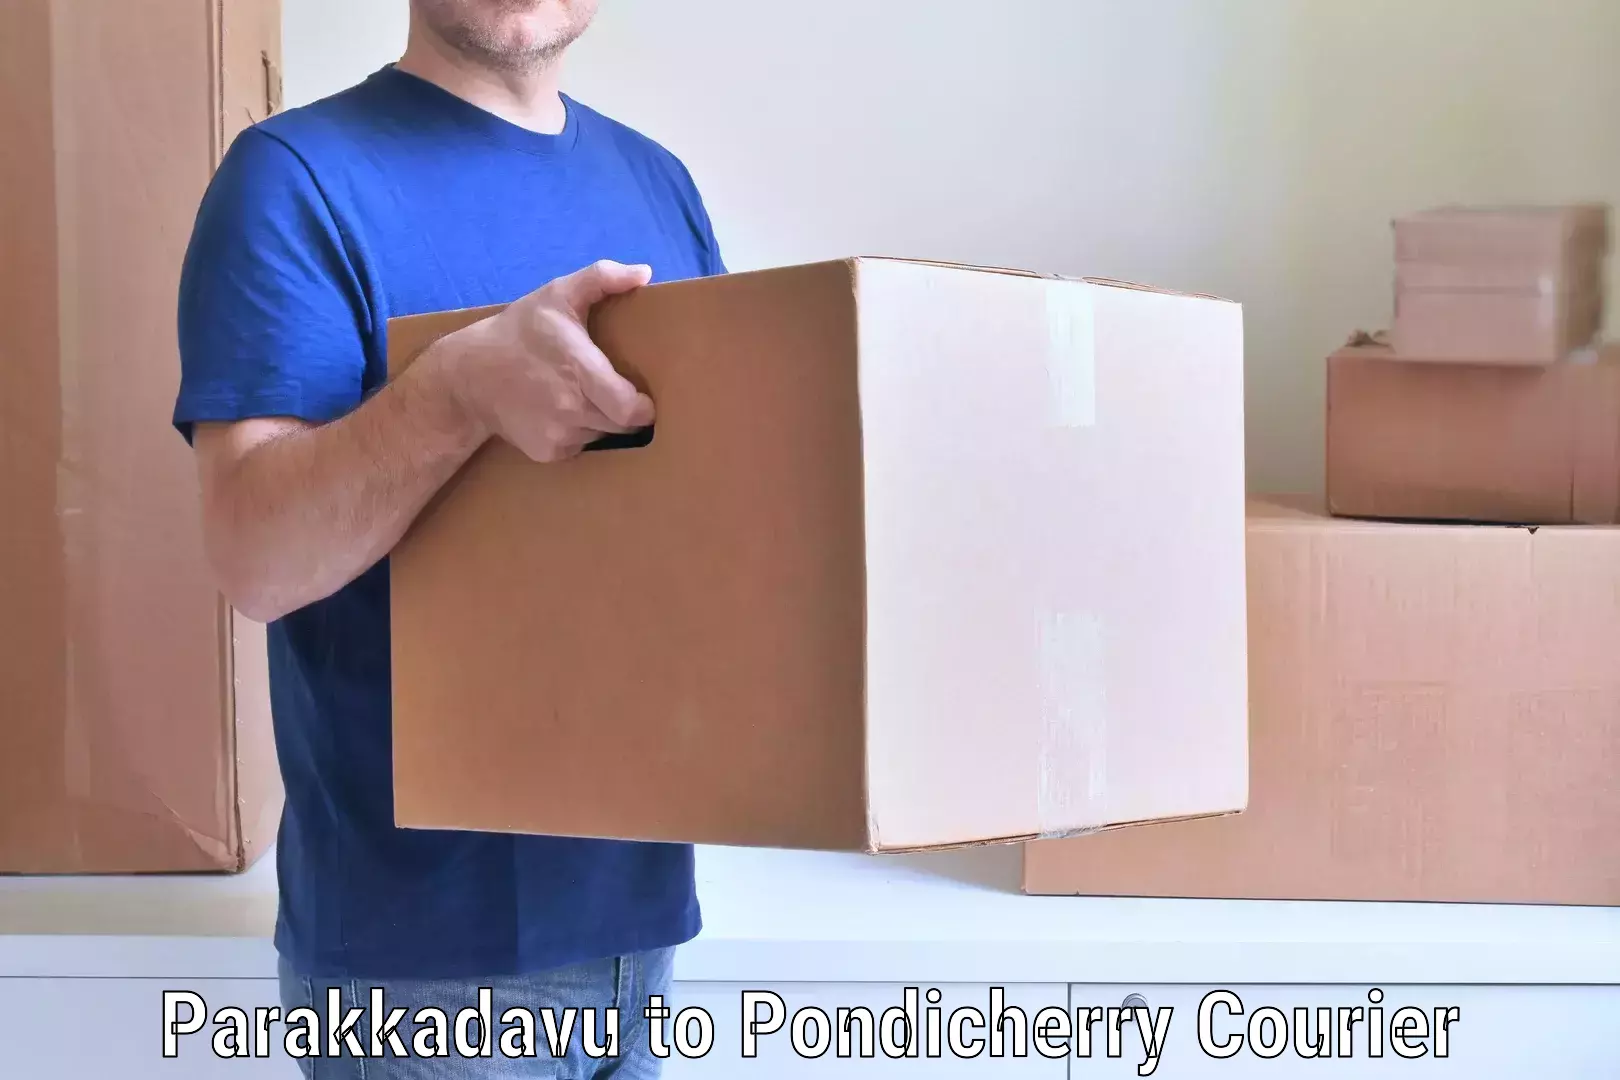 Furniture relocation experts Parakkadavu to Pondicherry